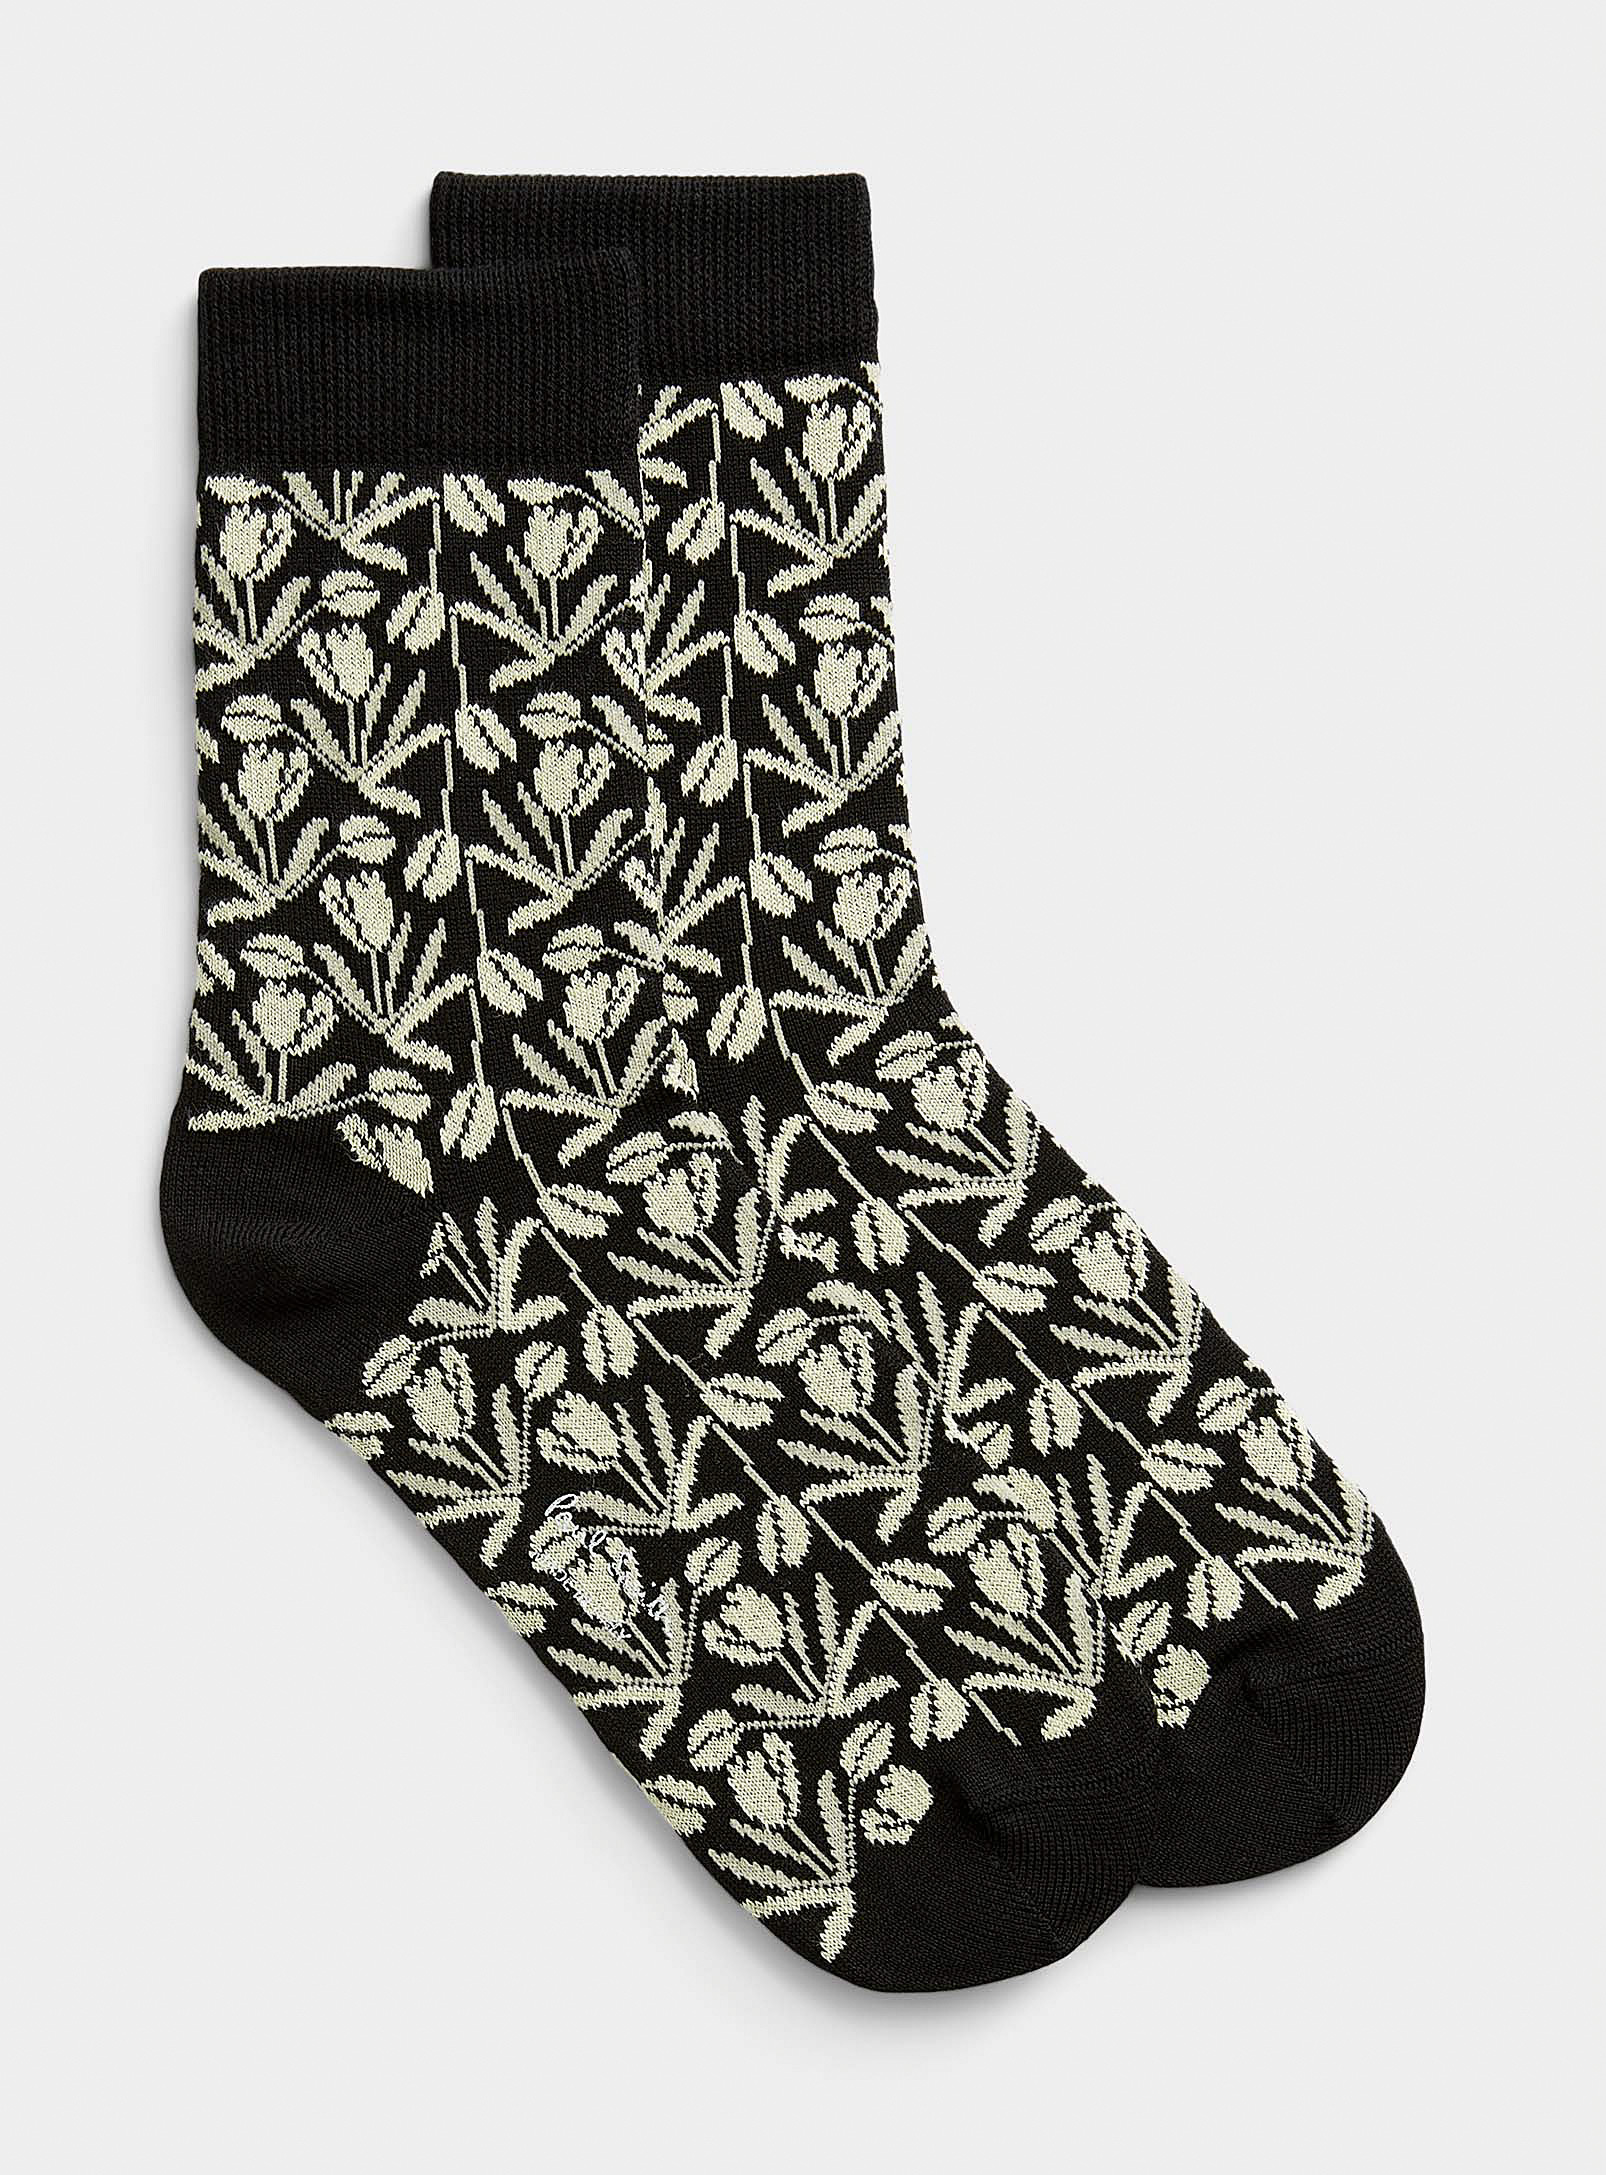 Paul Smith - Women's Tulip sock